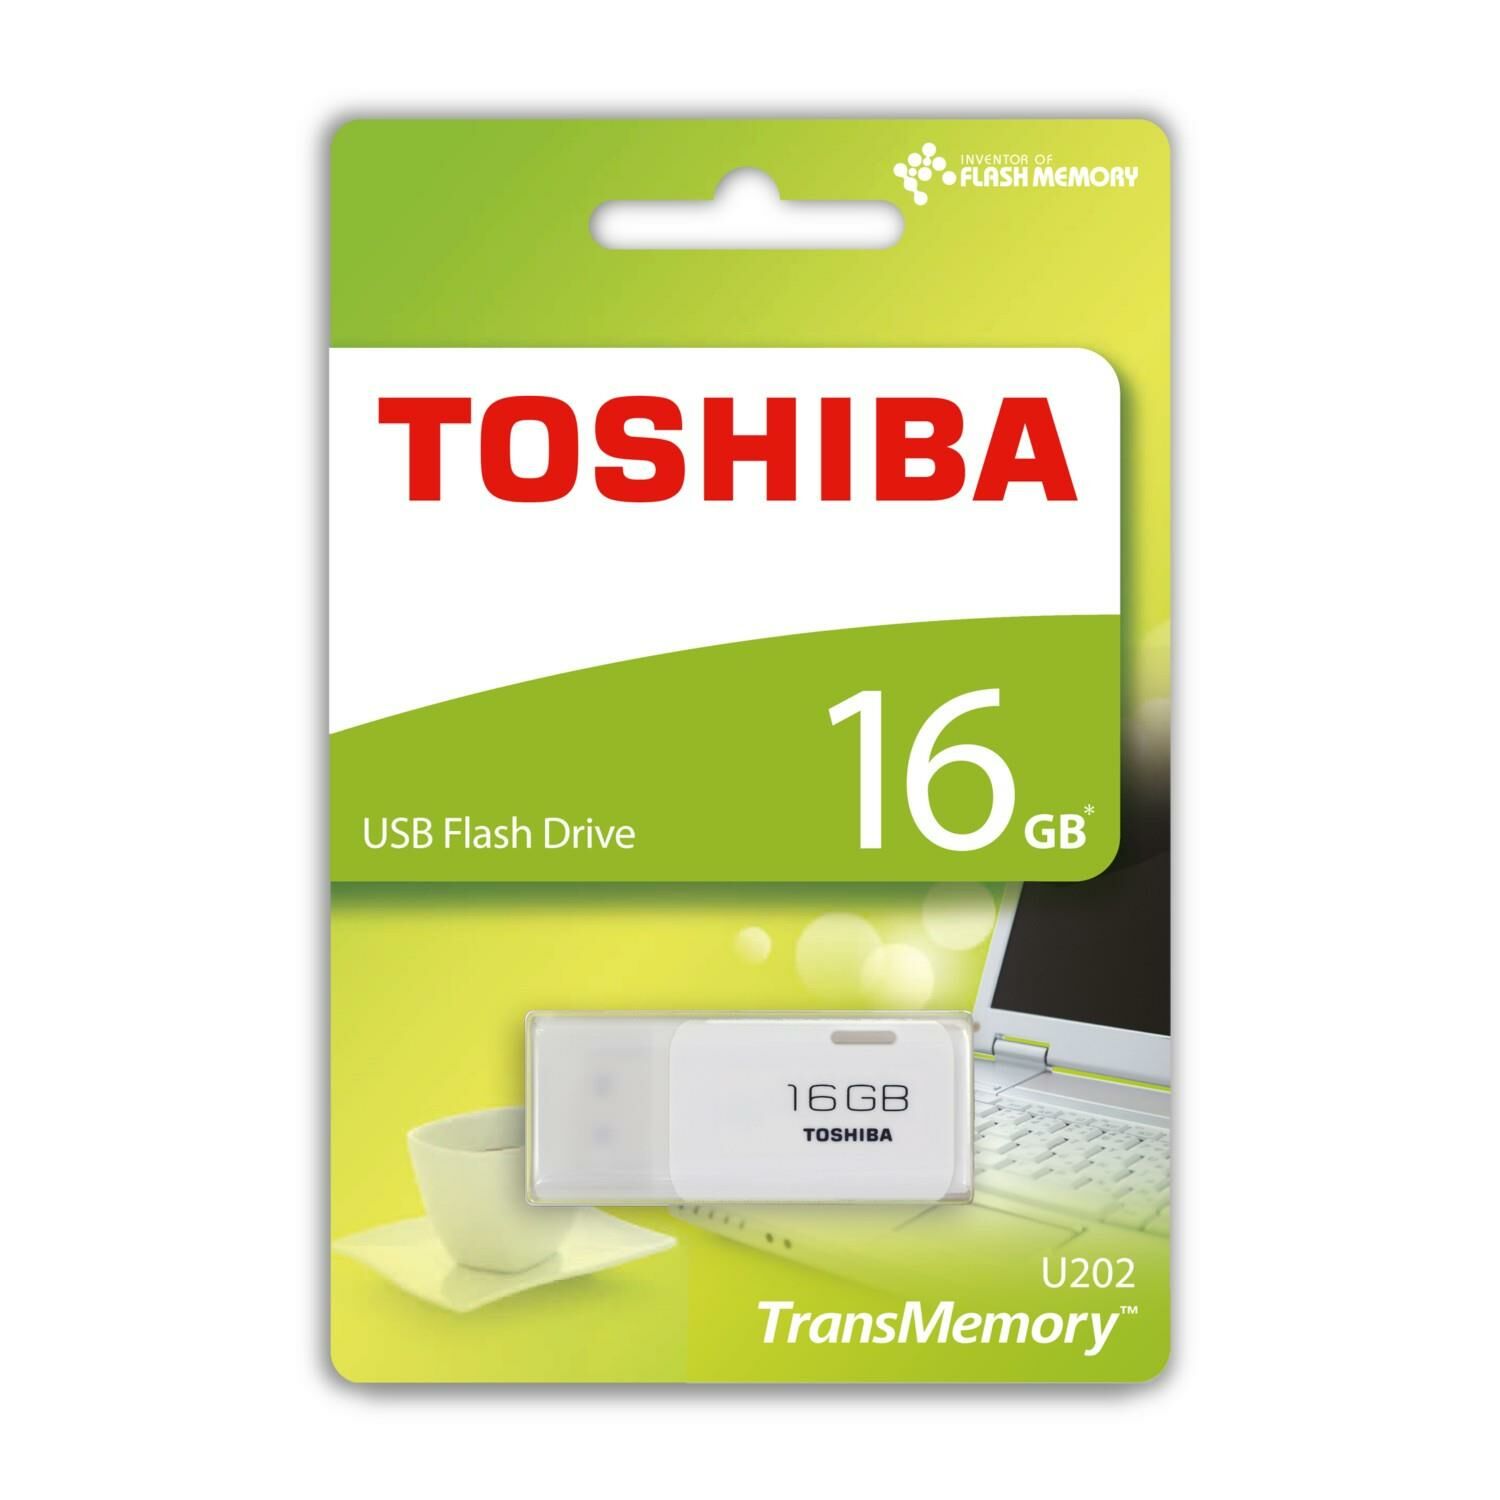 TOSHIBA 16GB BEYAZ (HAYABUSA) FLASH DISK